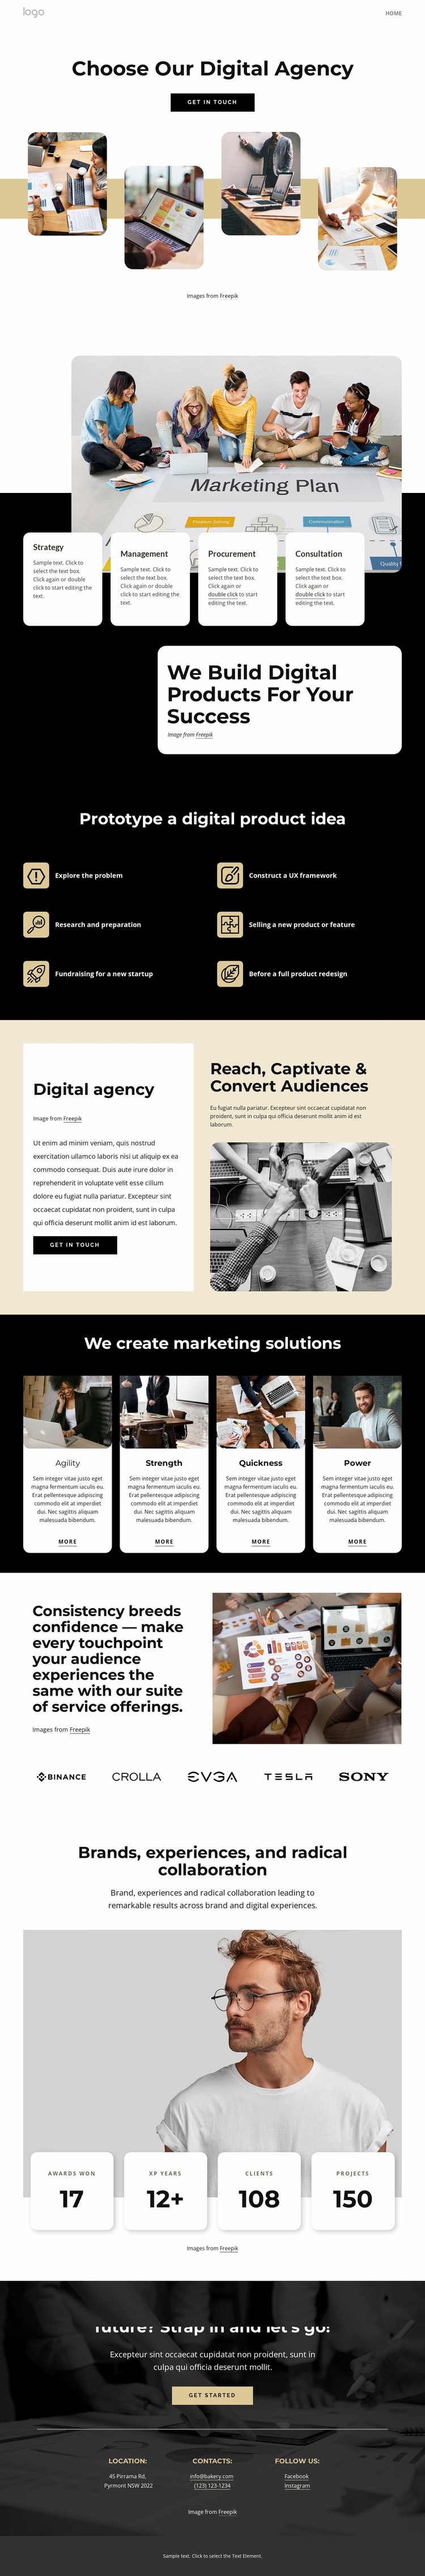 Choose our digital agency Landing Page